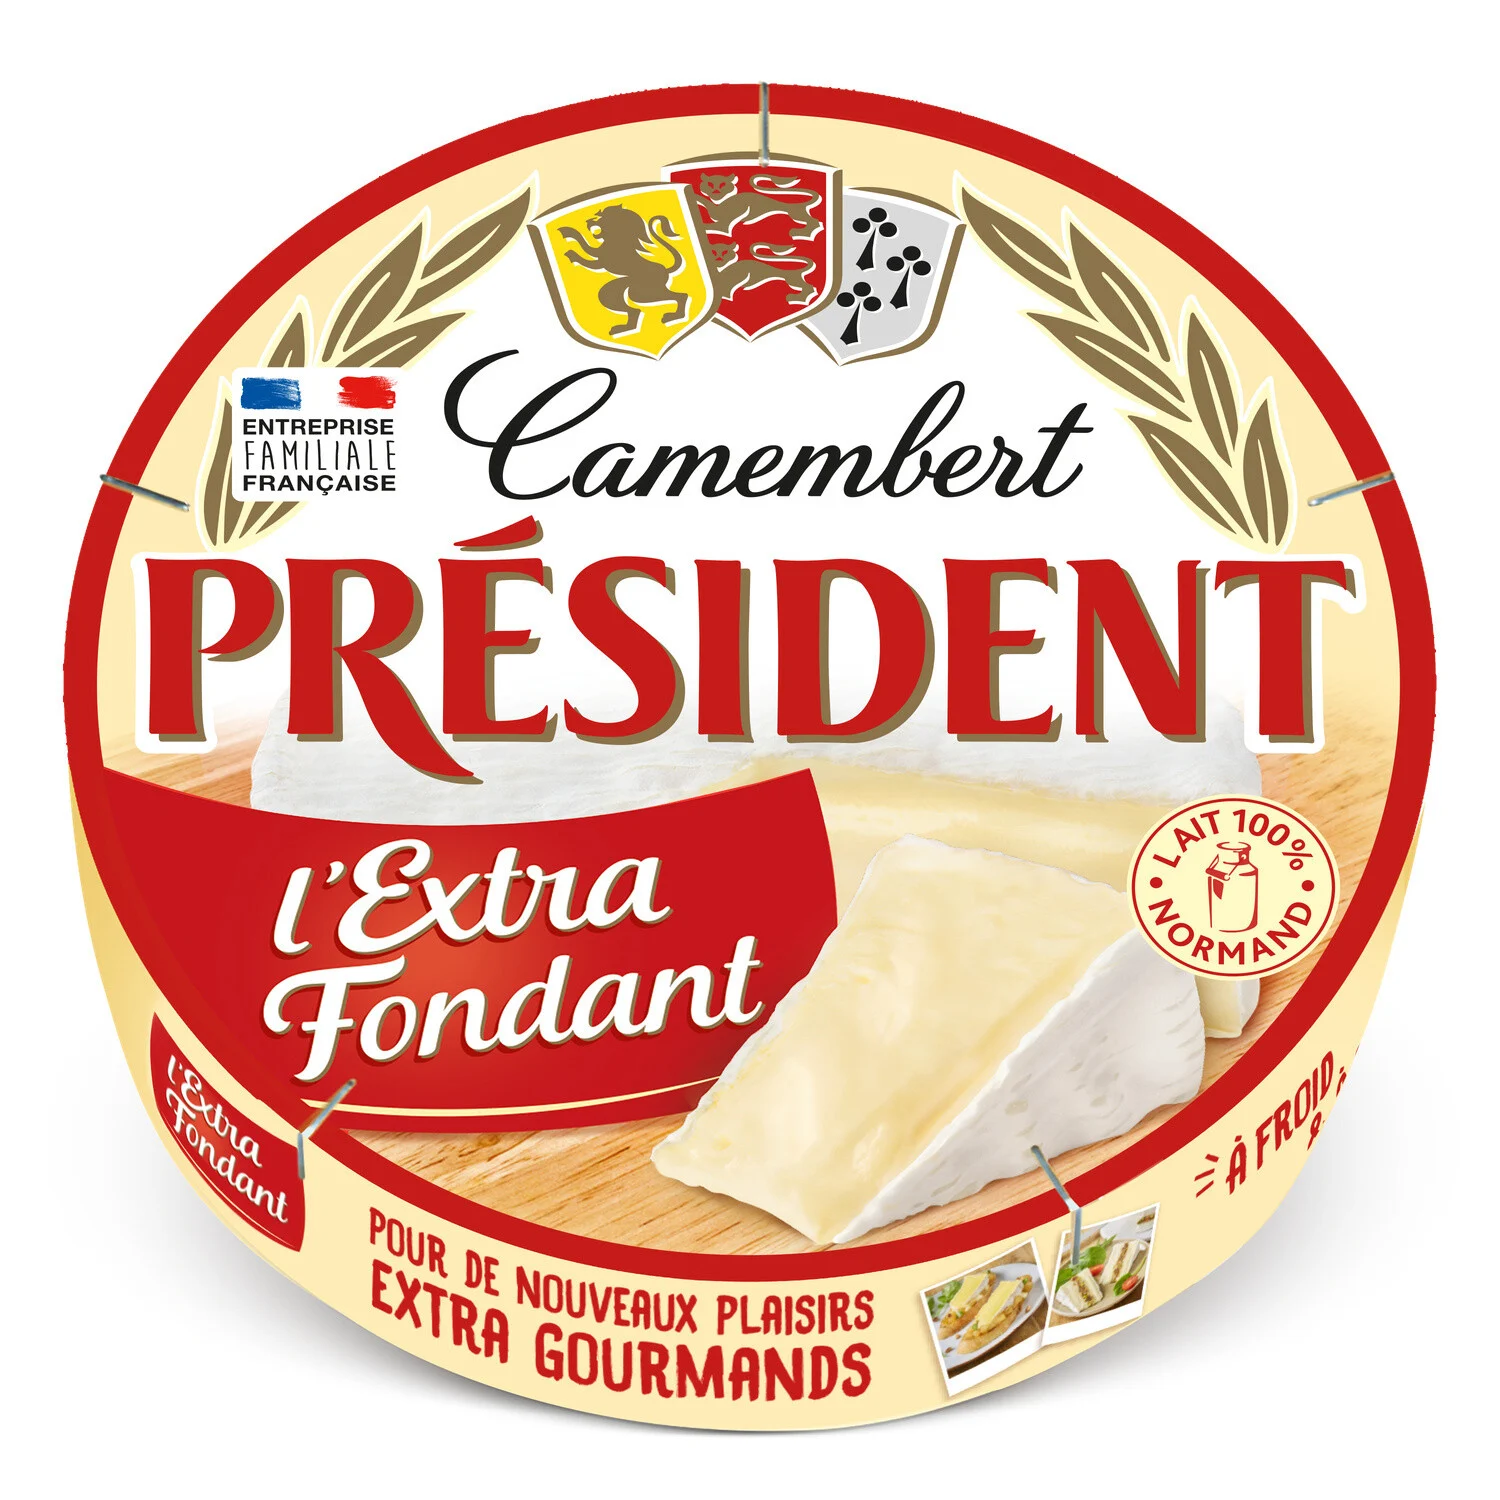 President Camembert extra Fondant 250g